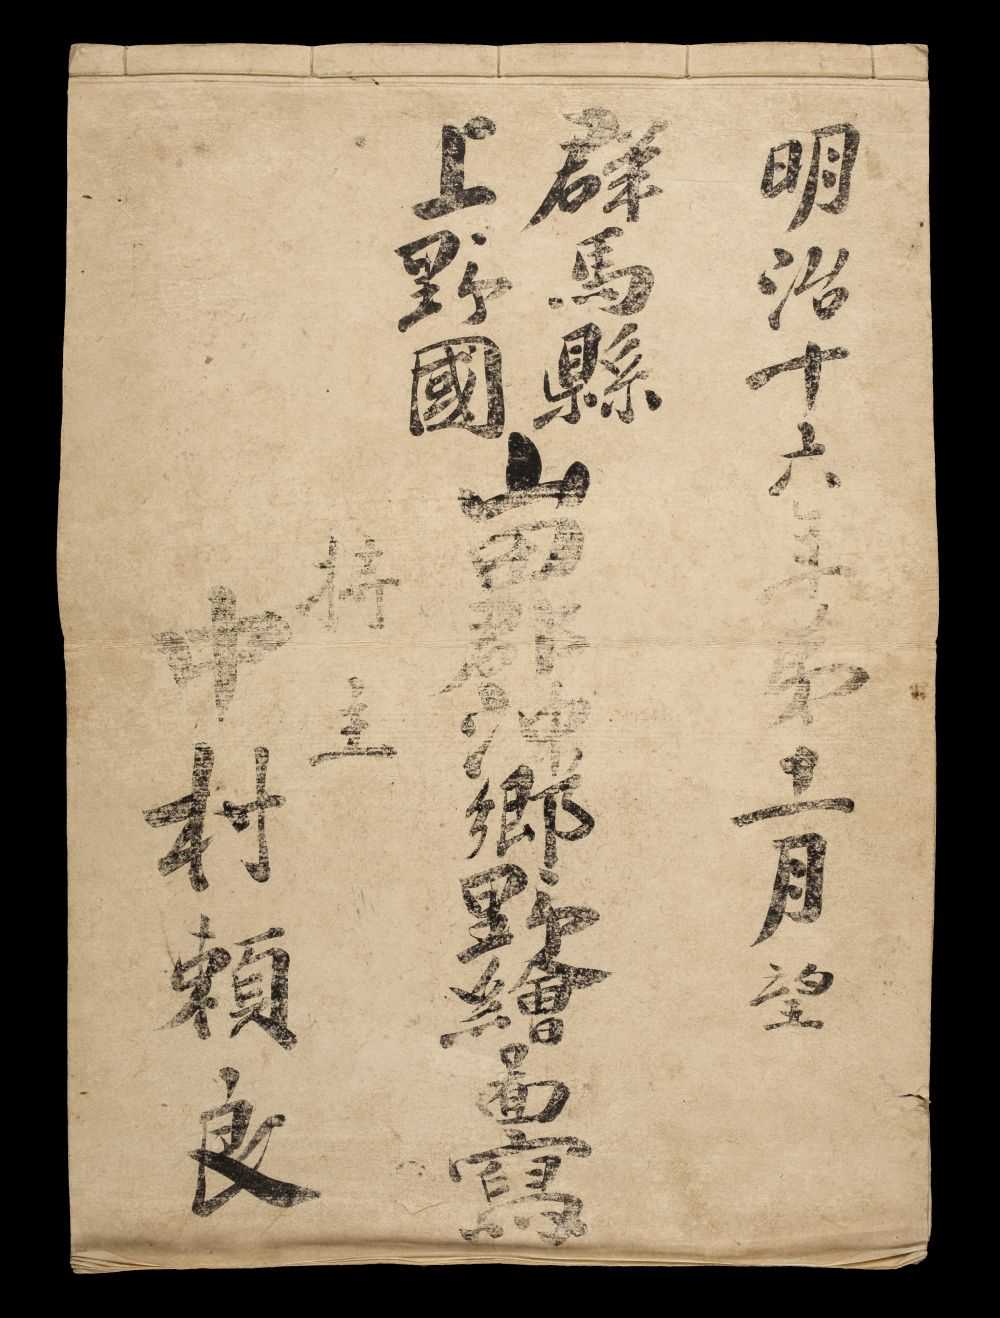 Lot 7 - Japanese Land Register. Okinogo, 1883